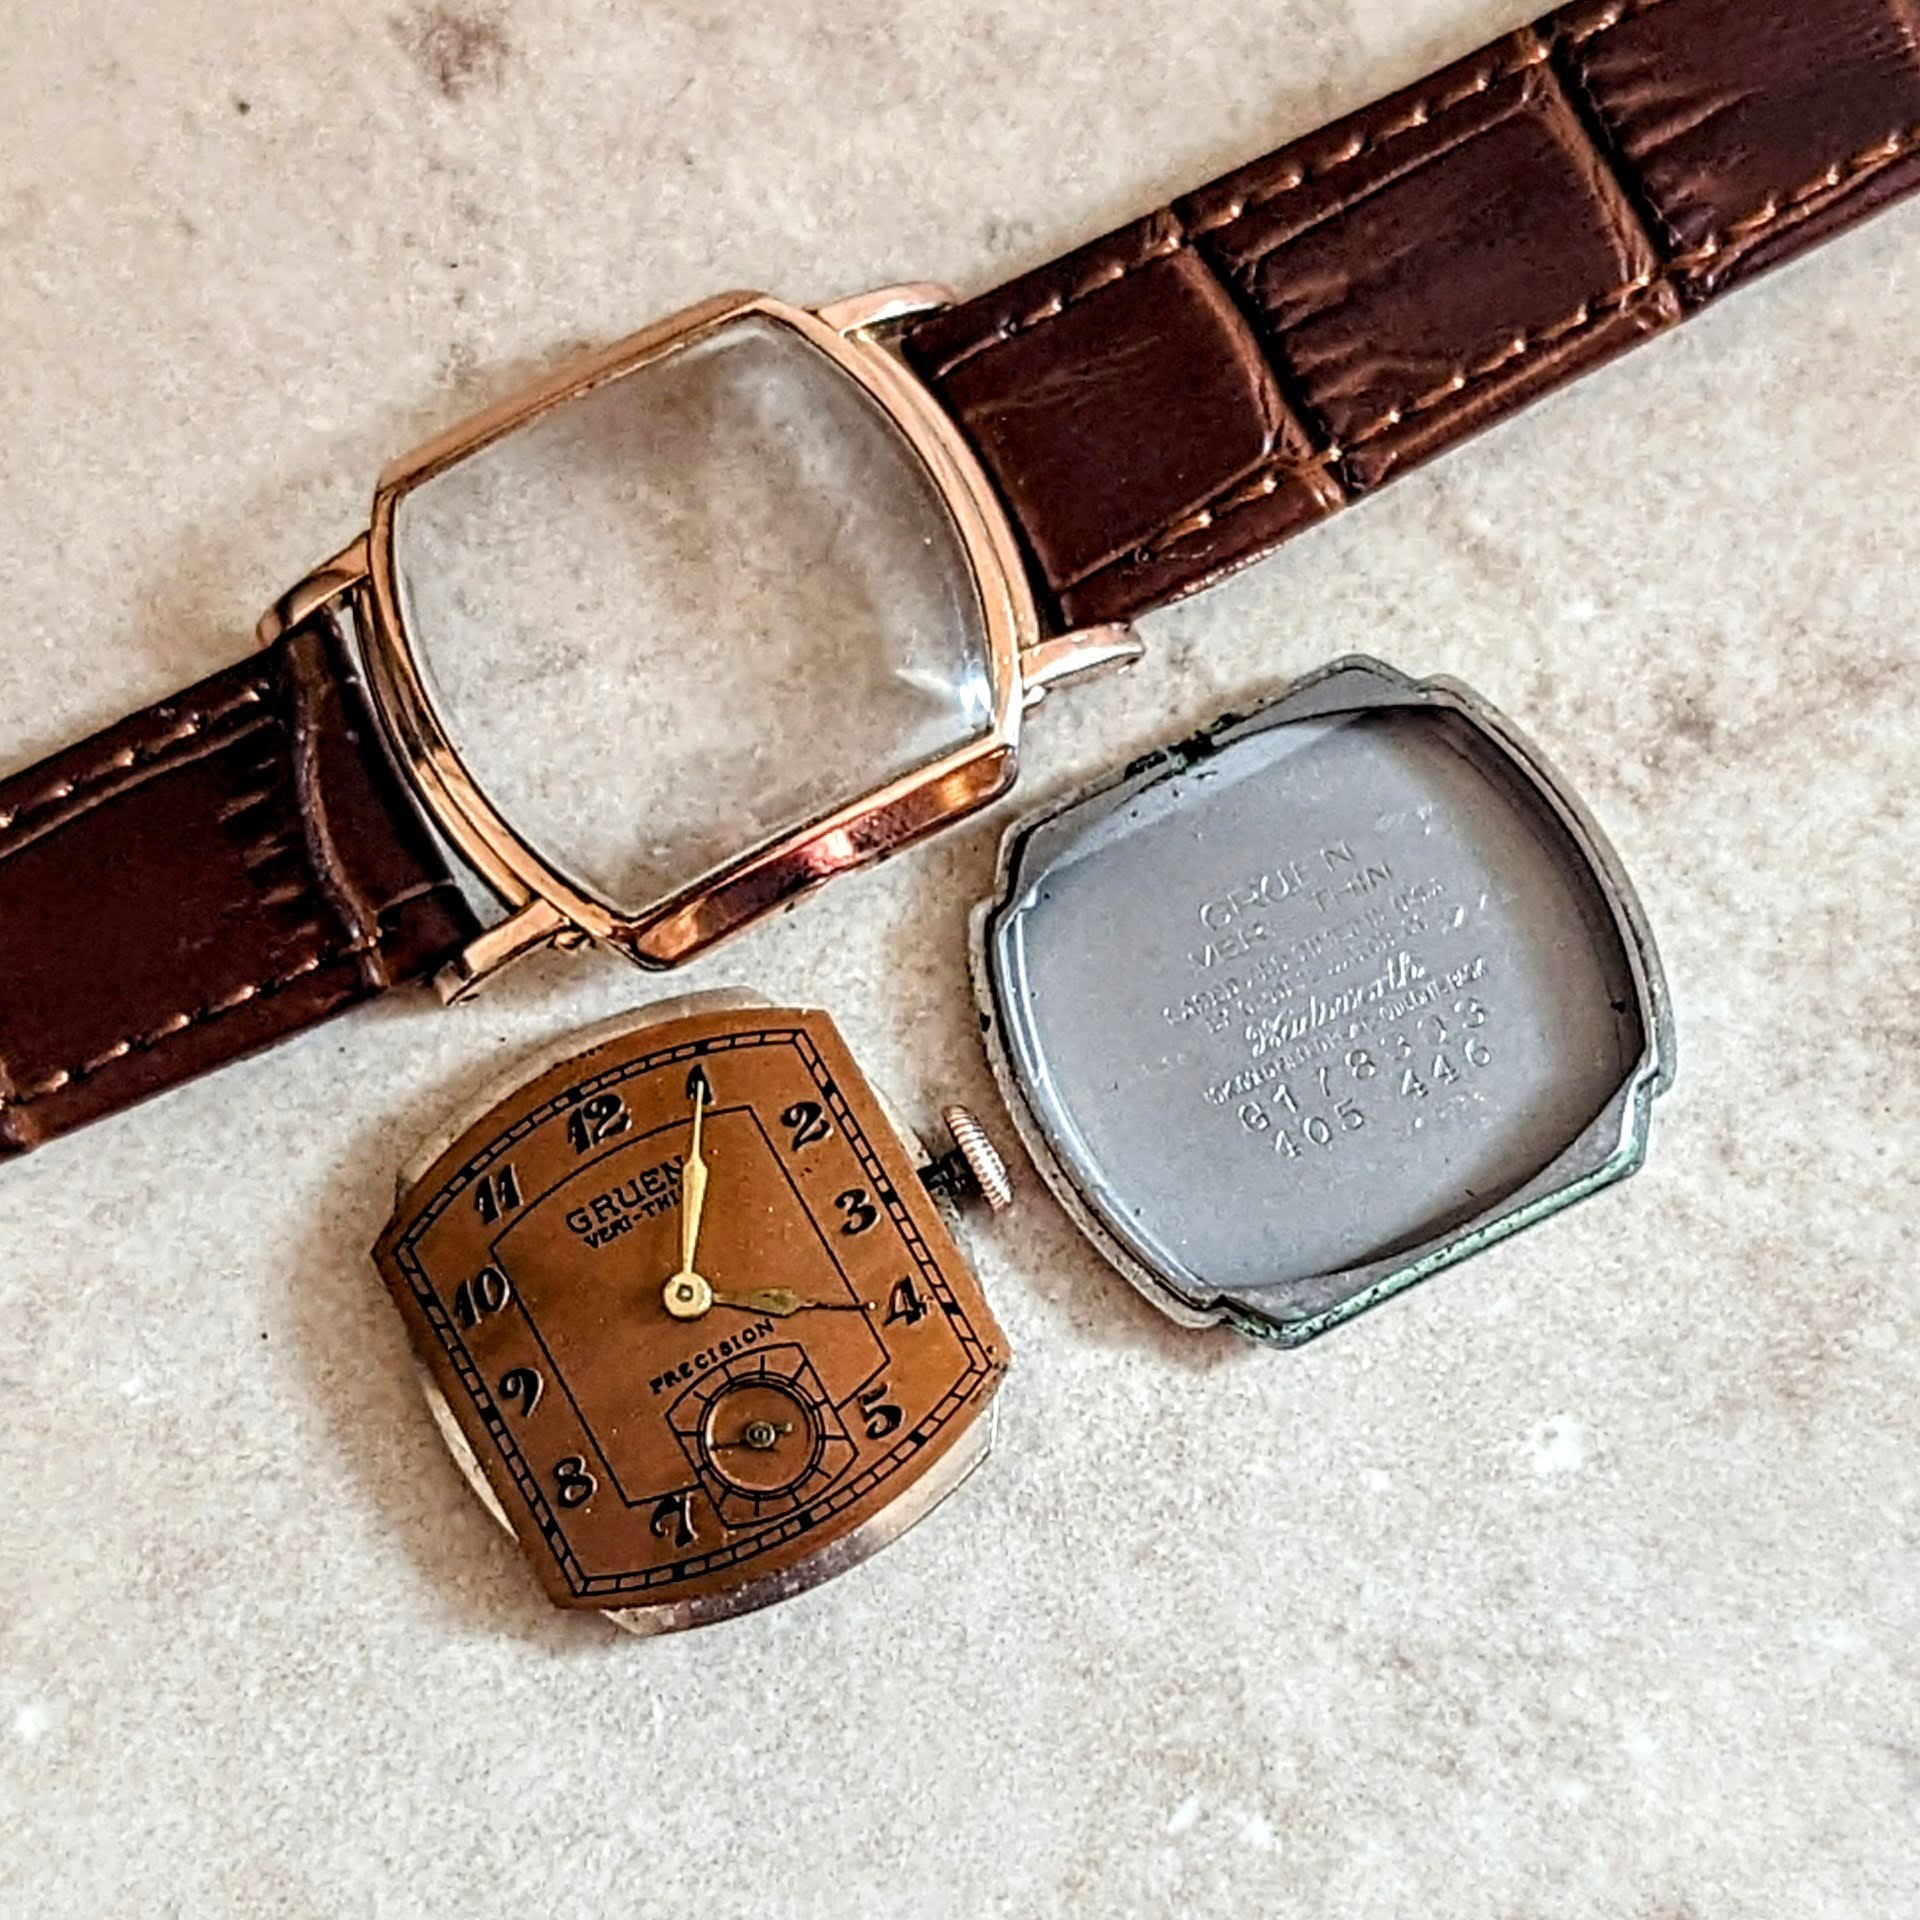 GRUEN Veri-Thin Precision Wristwatch Coral Gold Case & Dial Conoruma Movement Grade 405 Watch